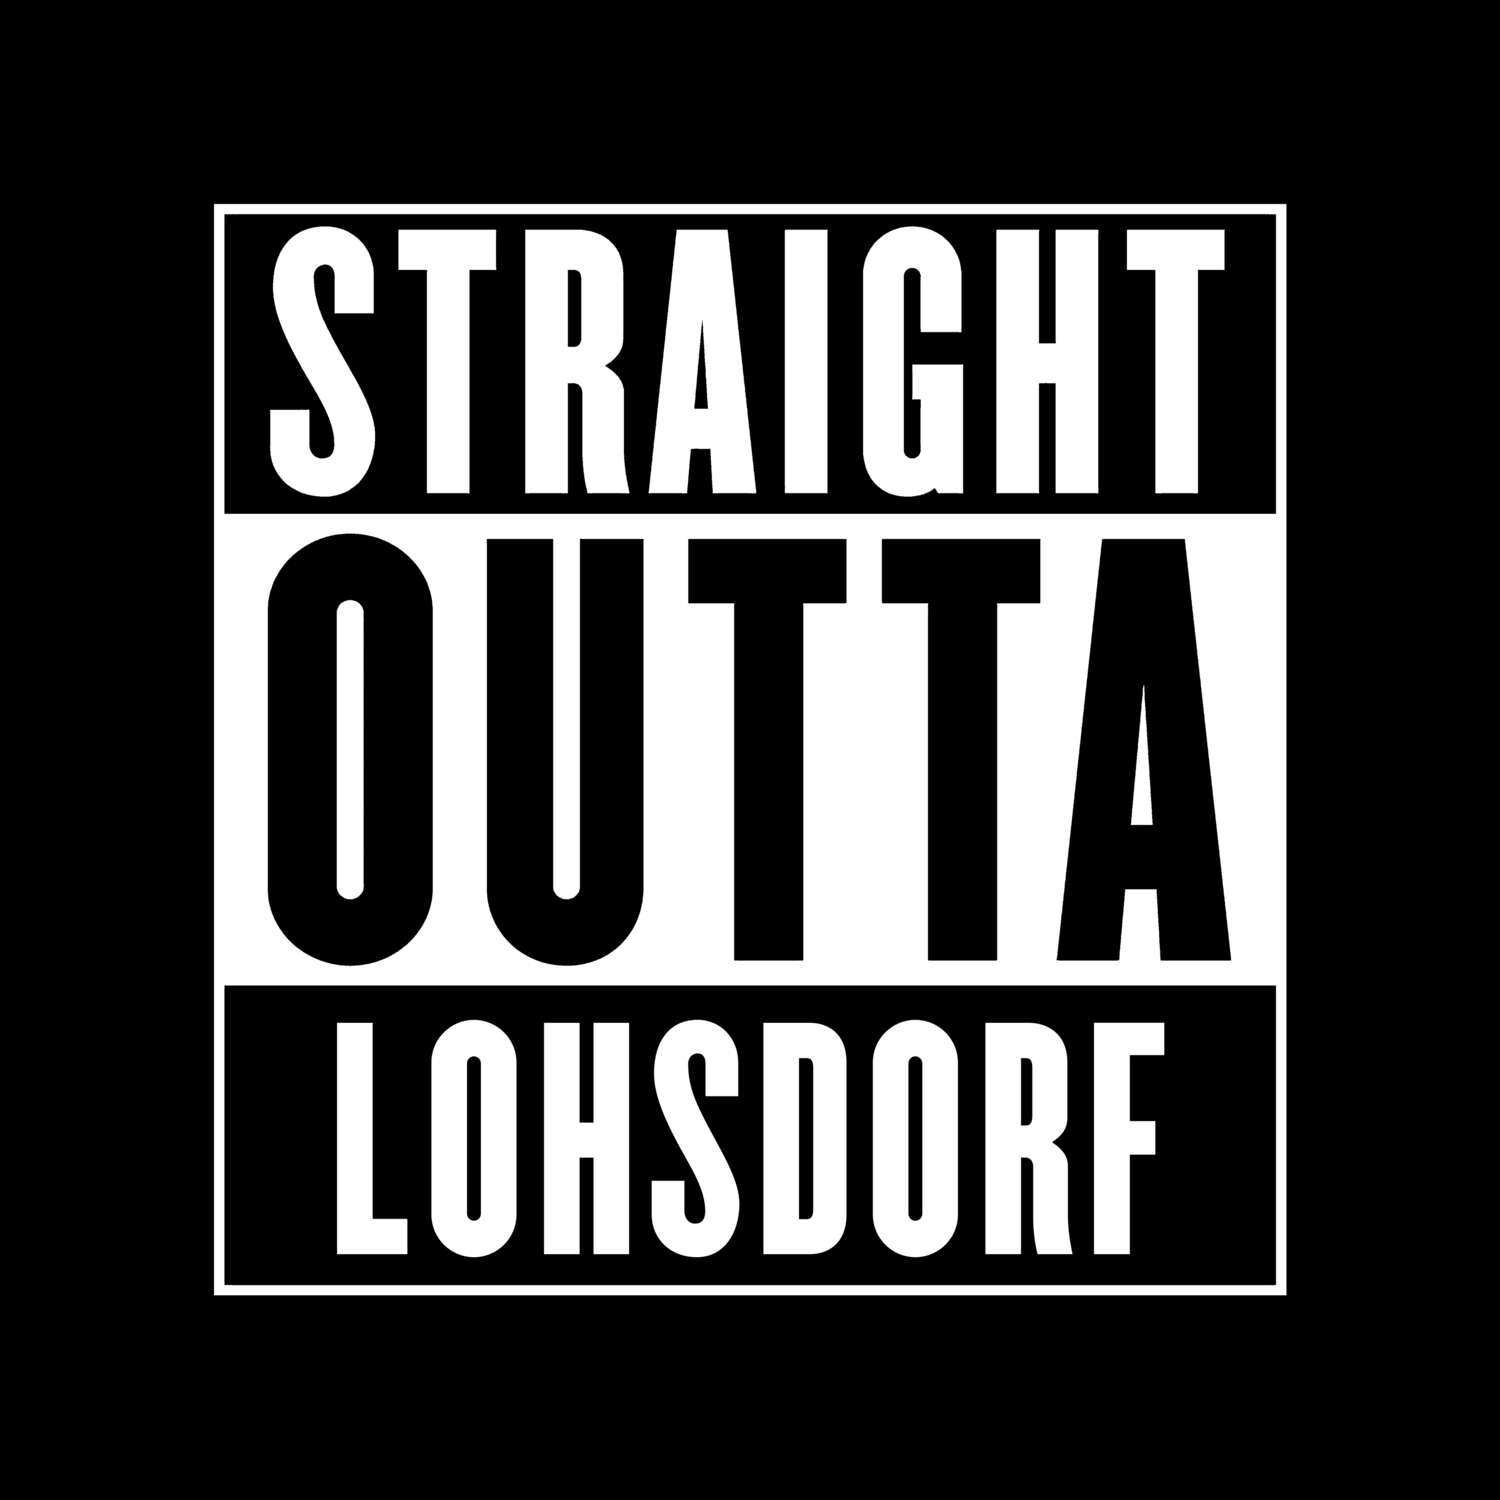 Lohsdorf T-Shirt »Straight Outta«